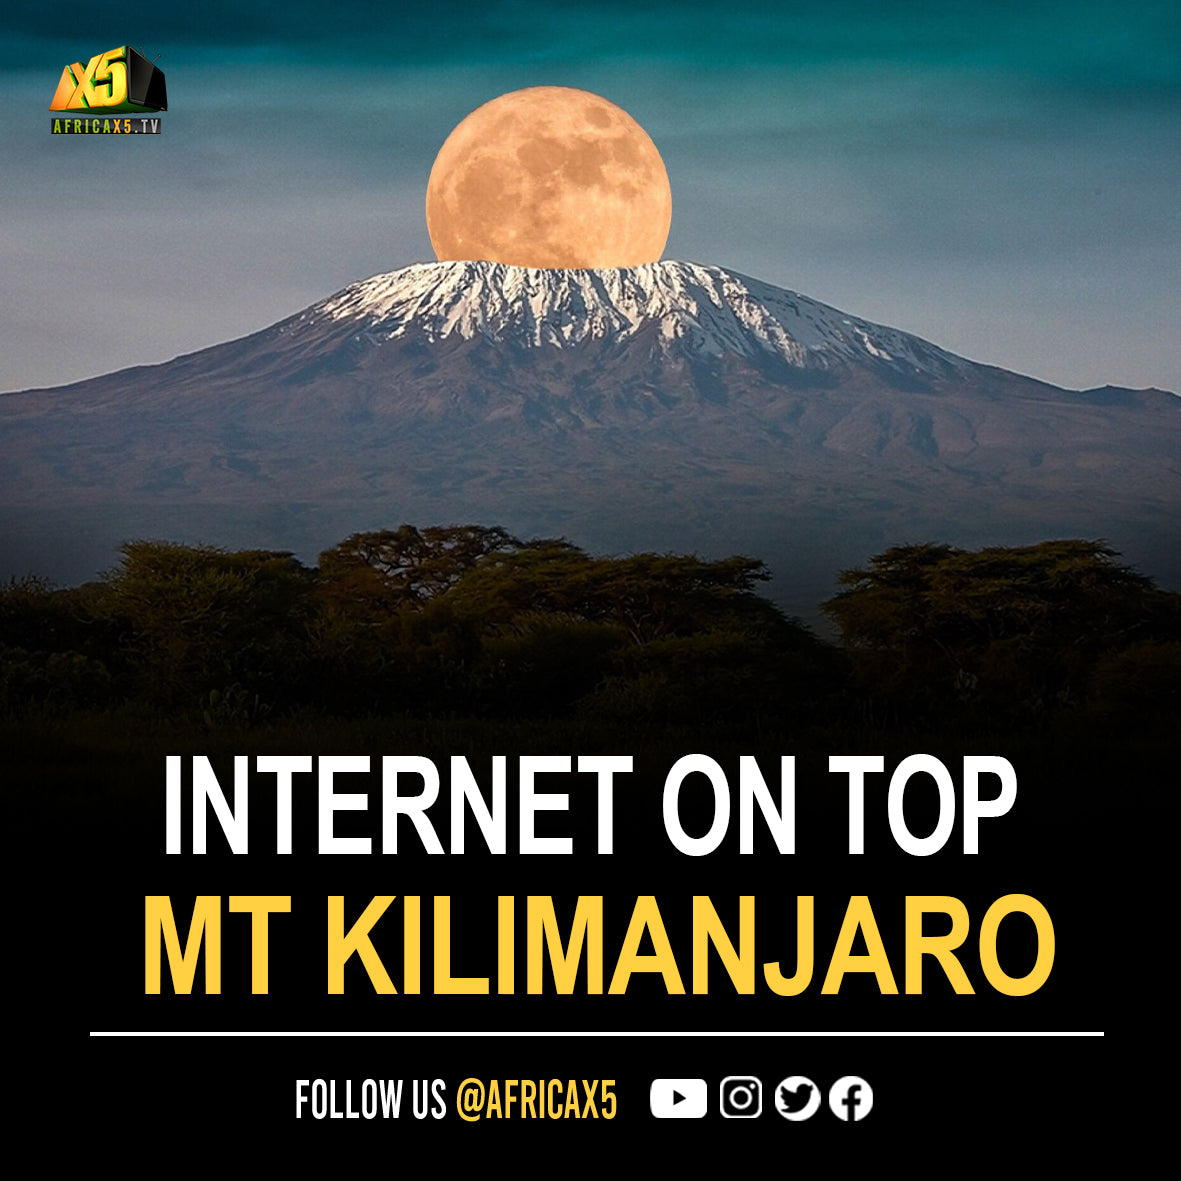 Tanzania offers internet on Africa’s tallest mountain